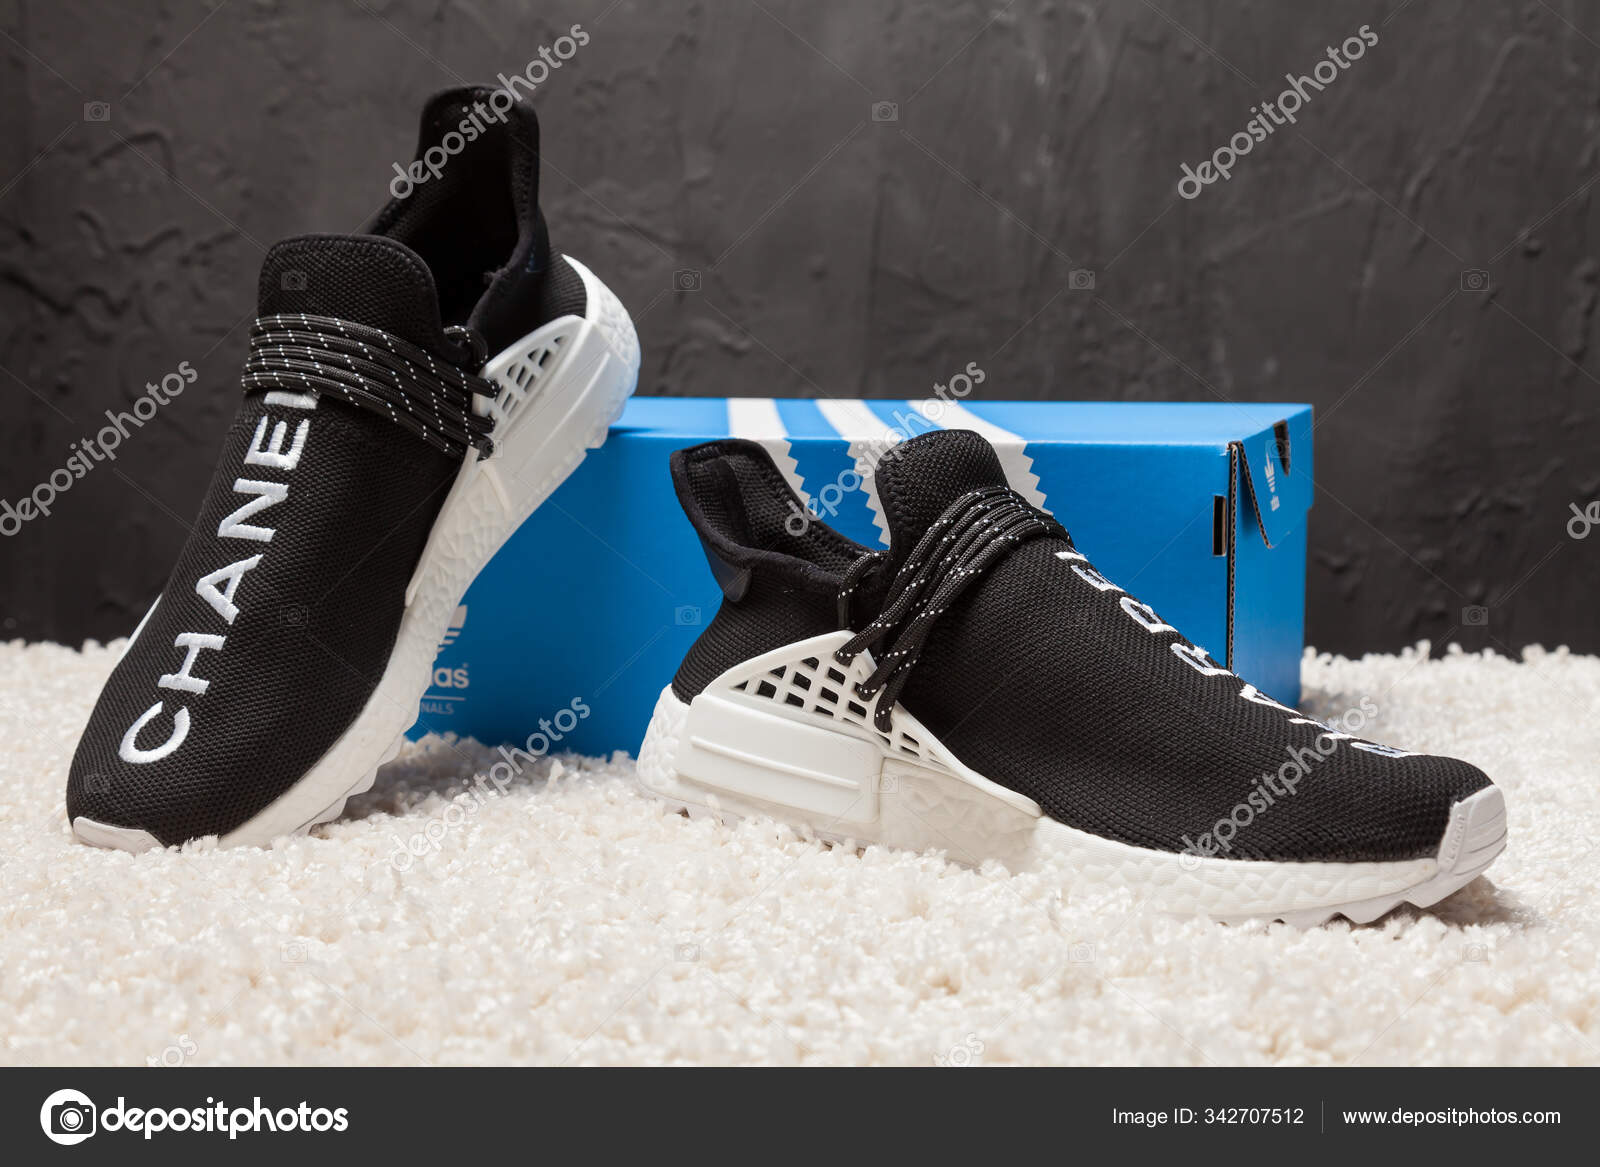 nice adidas shoes 2018